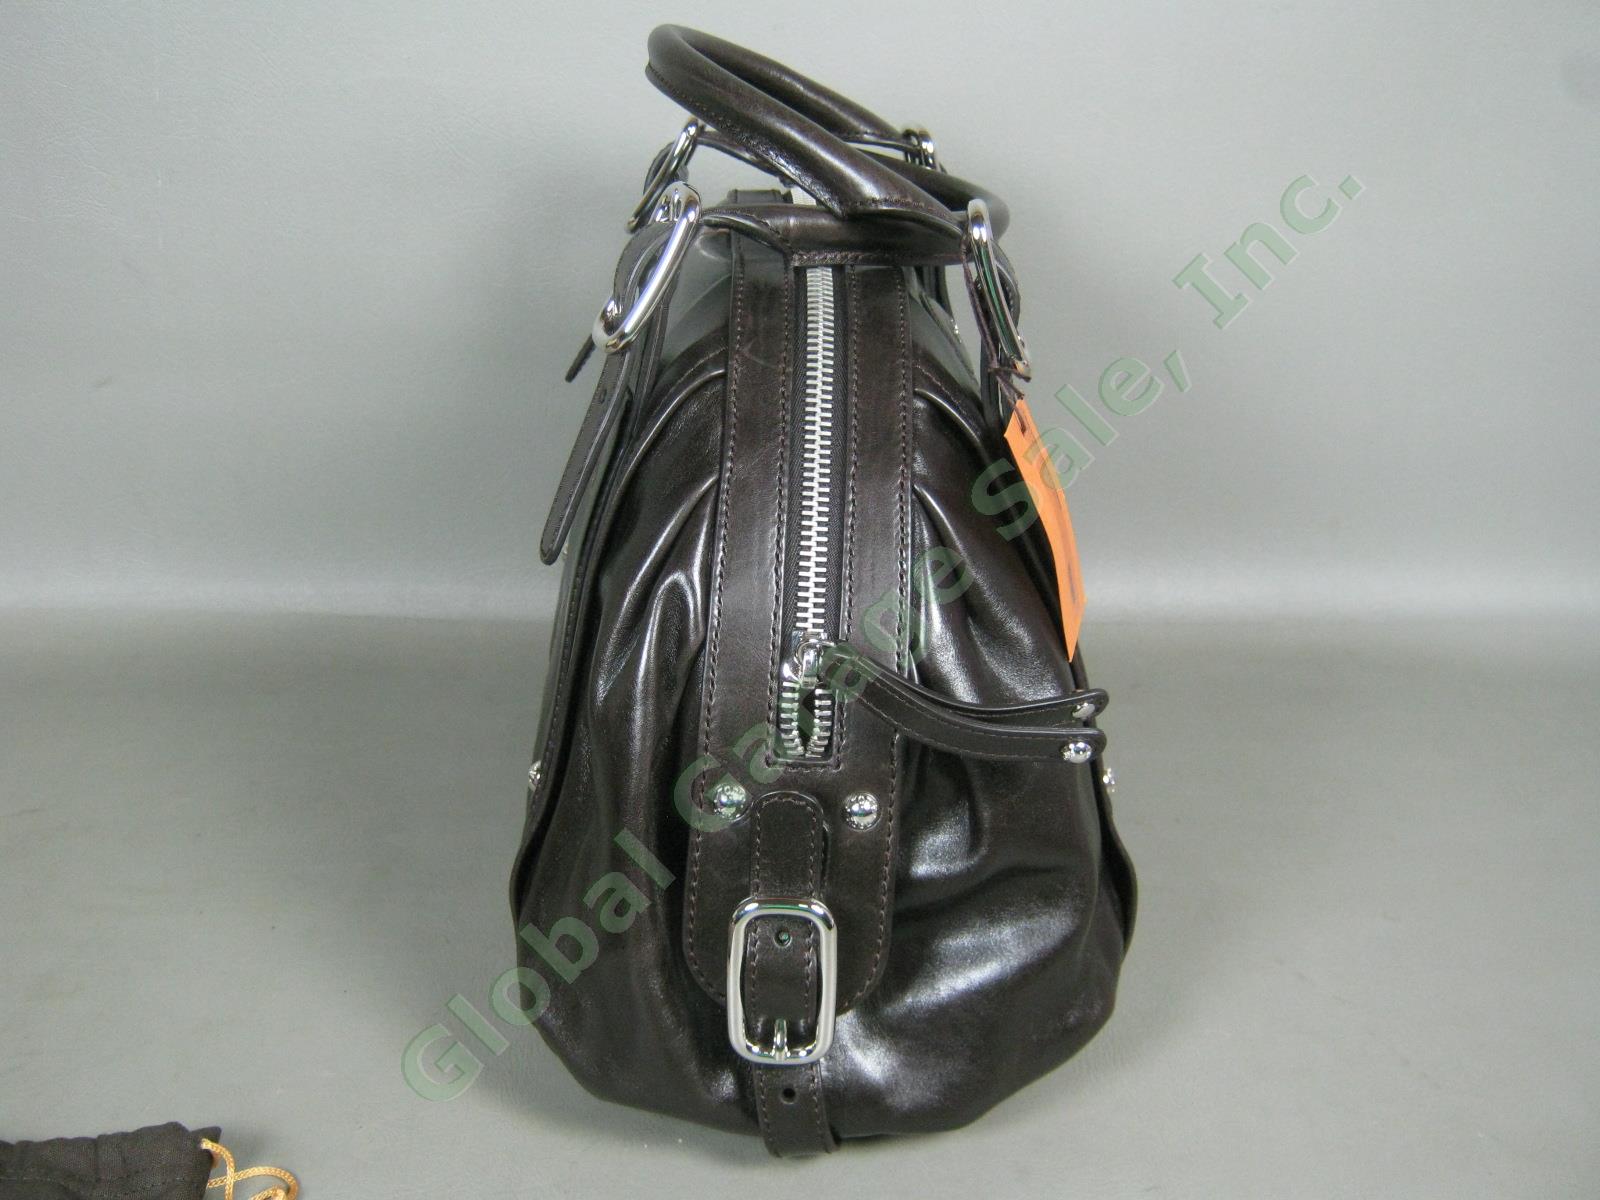 NEW IN BOX Tods Brown Leather G-Bag Bauletto Medium Handbag Pocketbook NO RES! 2